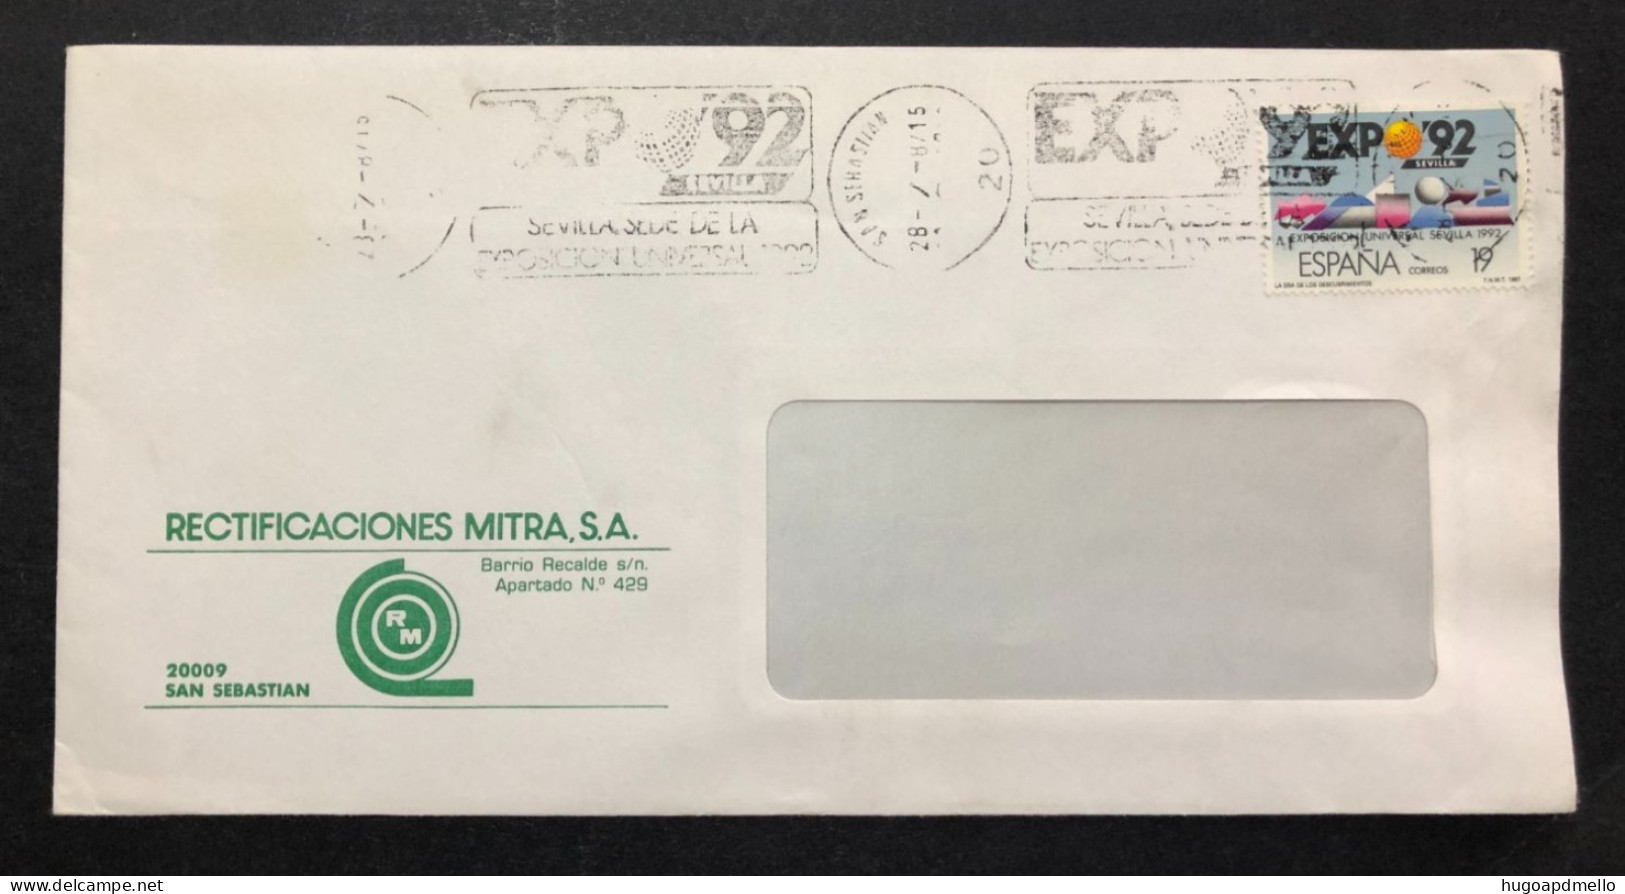 SPAIN, Cover With Special Cancellation « EXPO '92 », « SAN SEBASTIAN Postmark », 1987 - 1992 – Séville (Espagne)